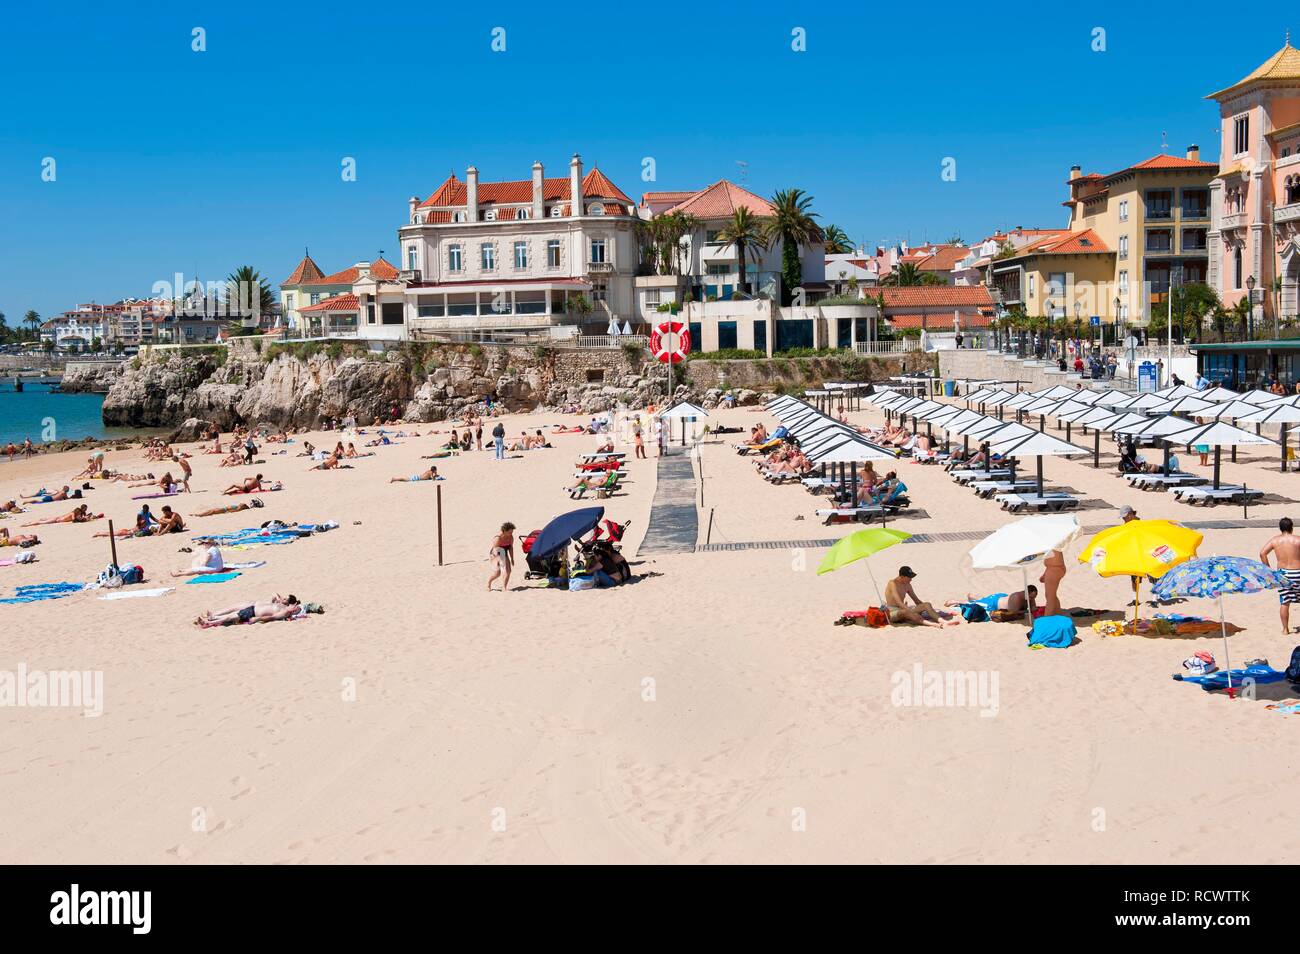 Praia da Conceiçao, Cascais, Lisbon Coast, Portugal, Europe Stock Photo